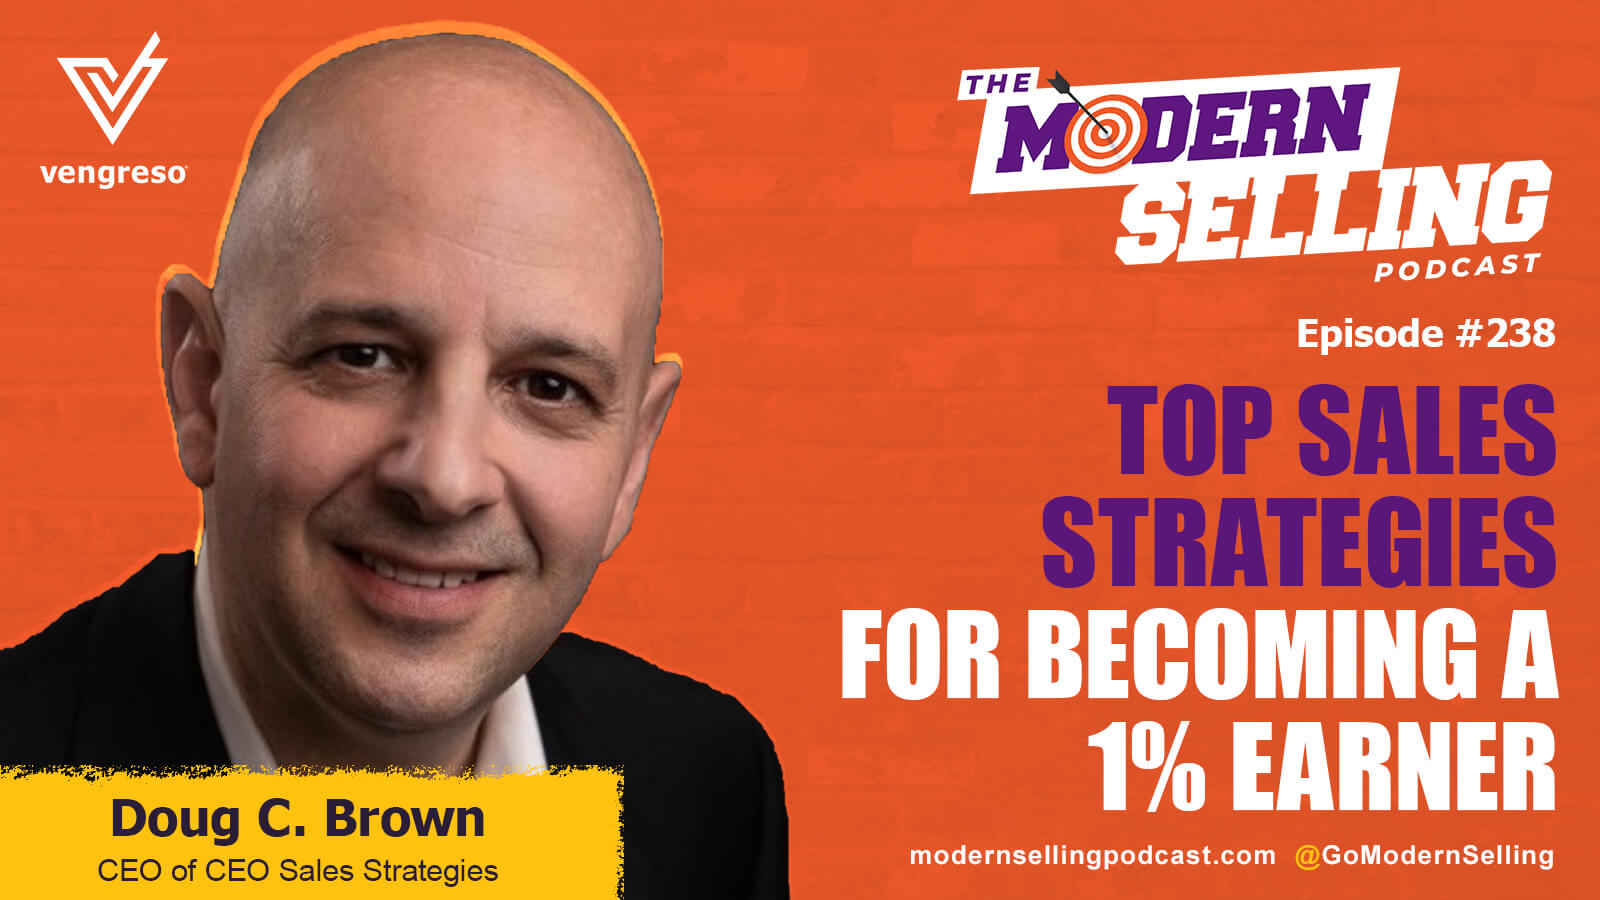 man smiling top sales strategies headshot of doug brown modern selling podcast episode #238